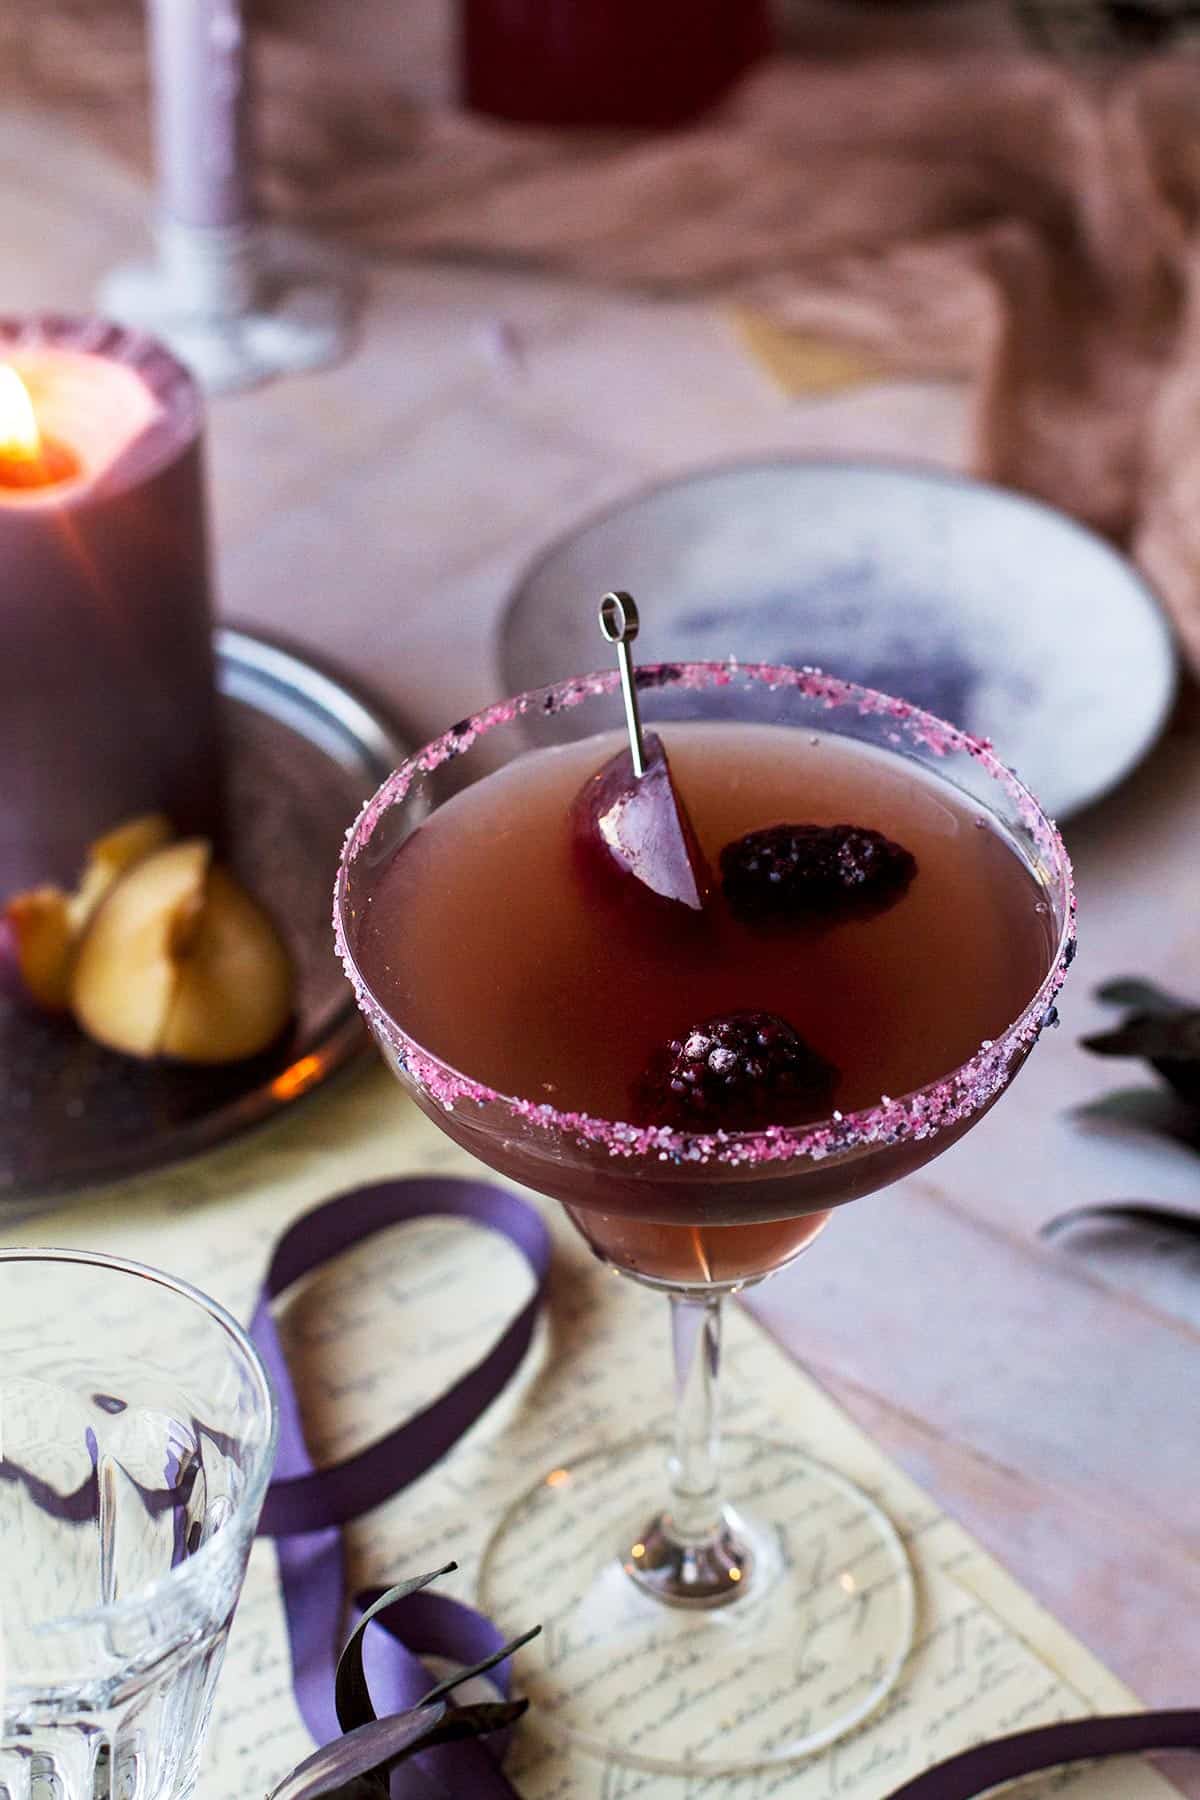 Plum cocktail in a margarita glass.